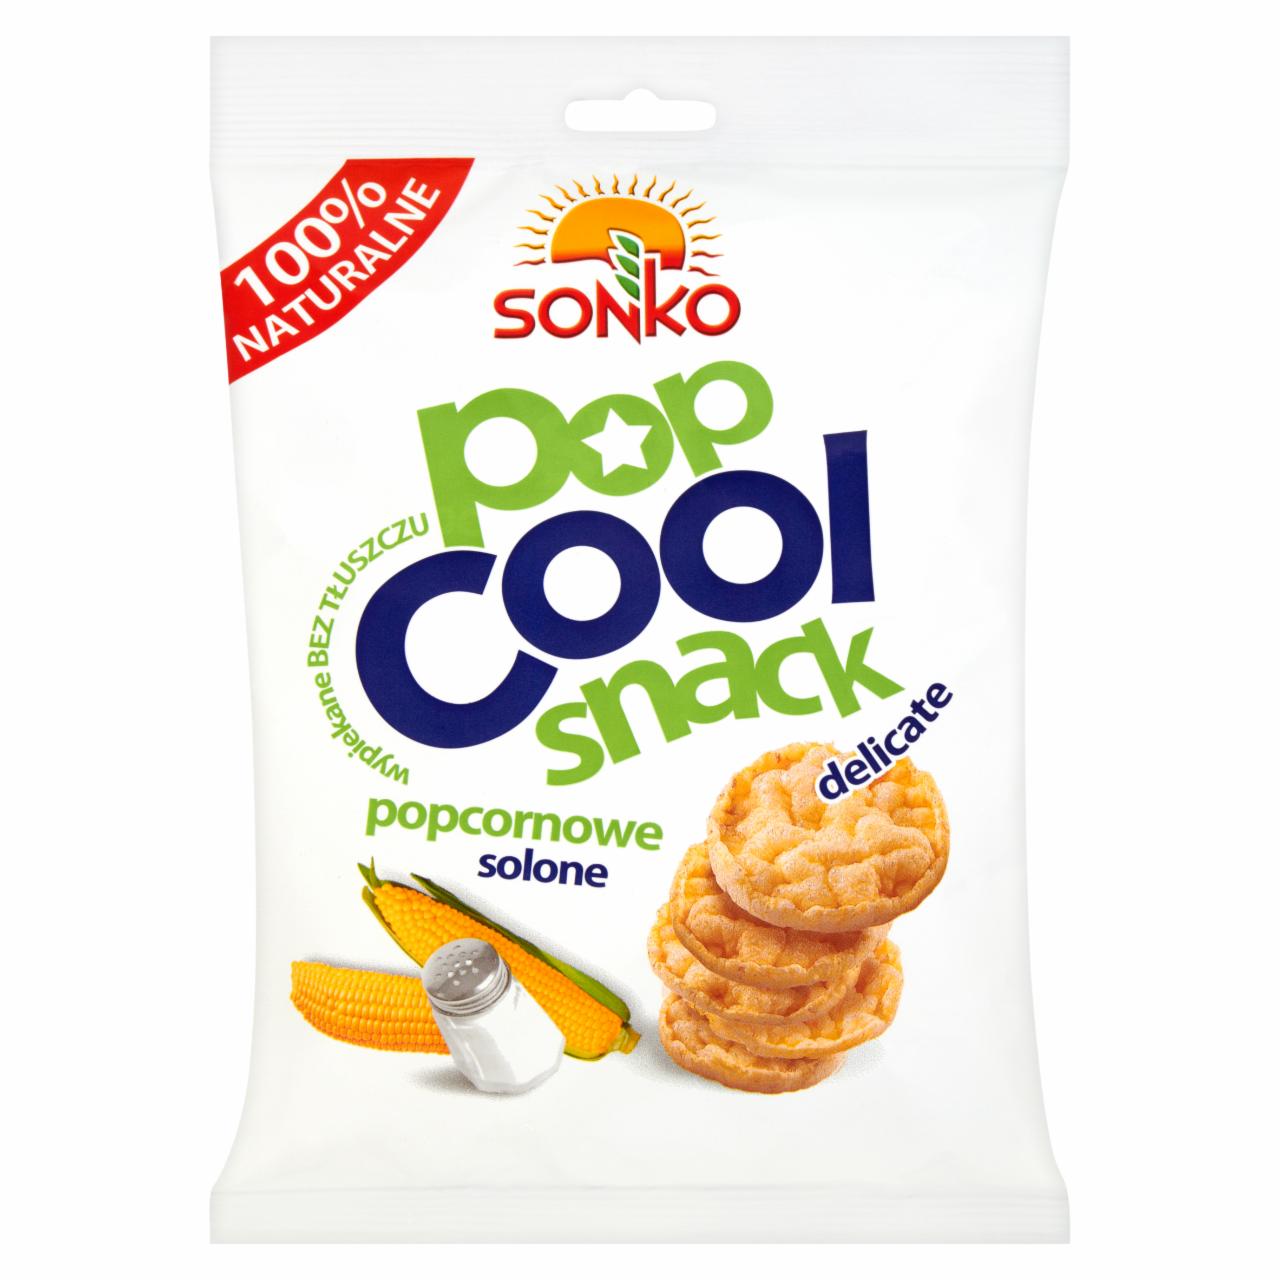 Zdjęcia - Sonko Popcool Snack delicate Sneksy popcornowe delikatne solone 60 g